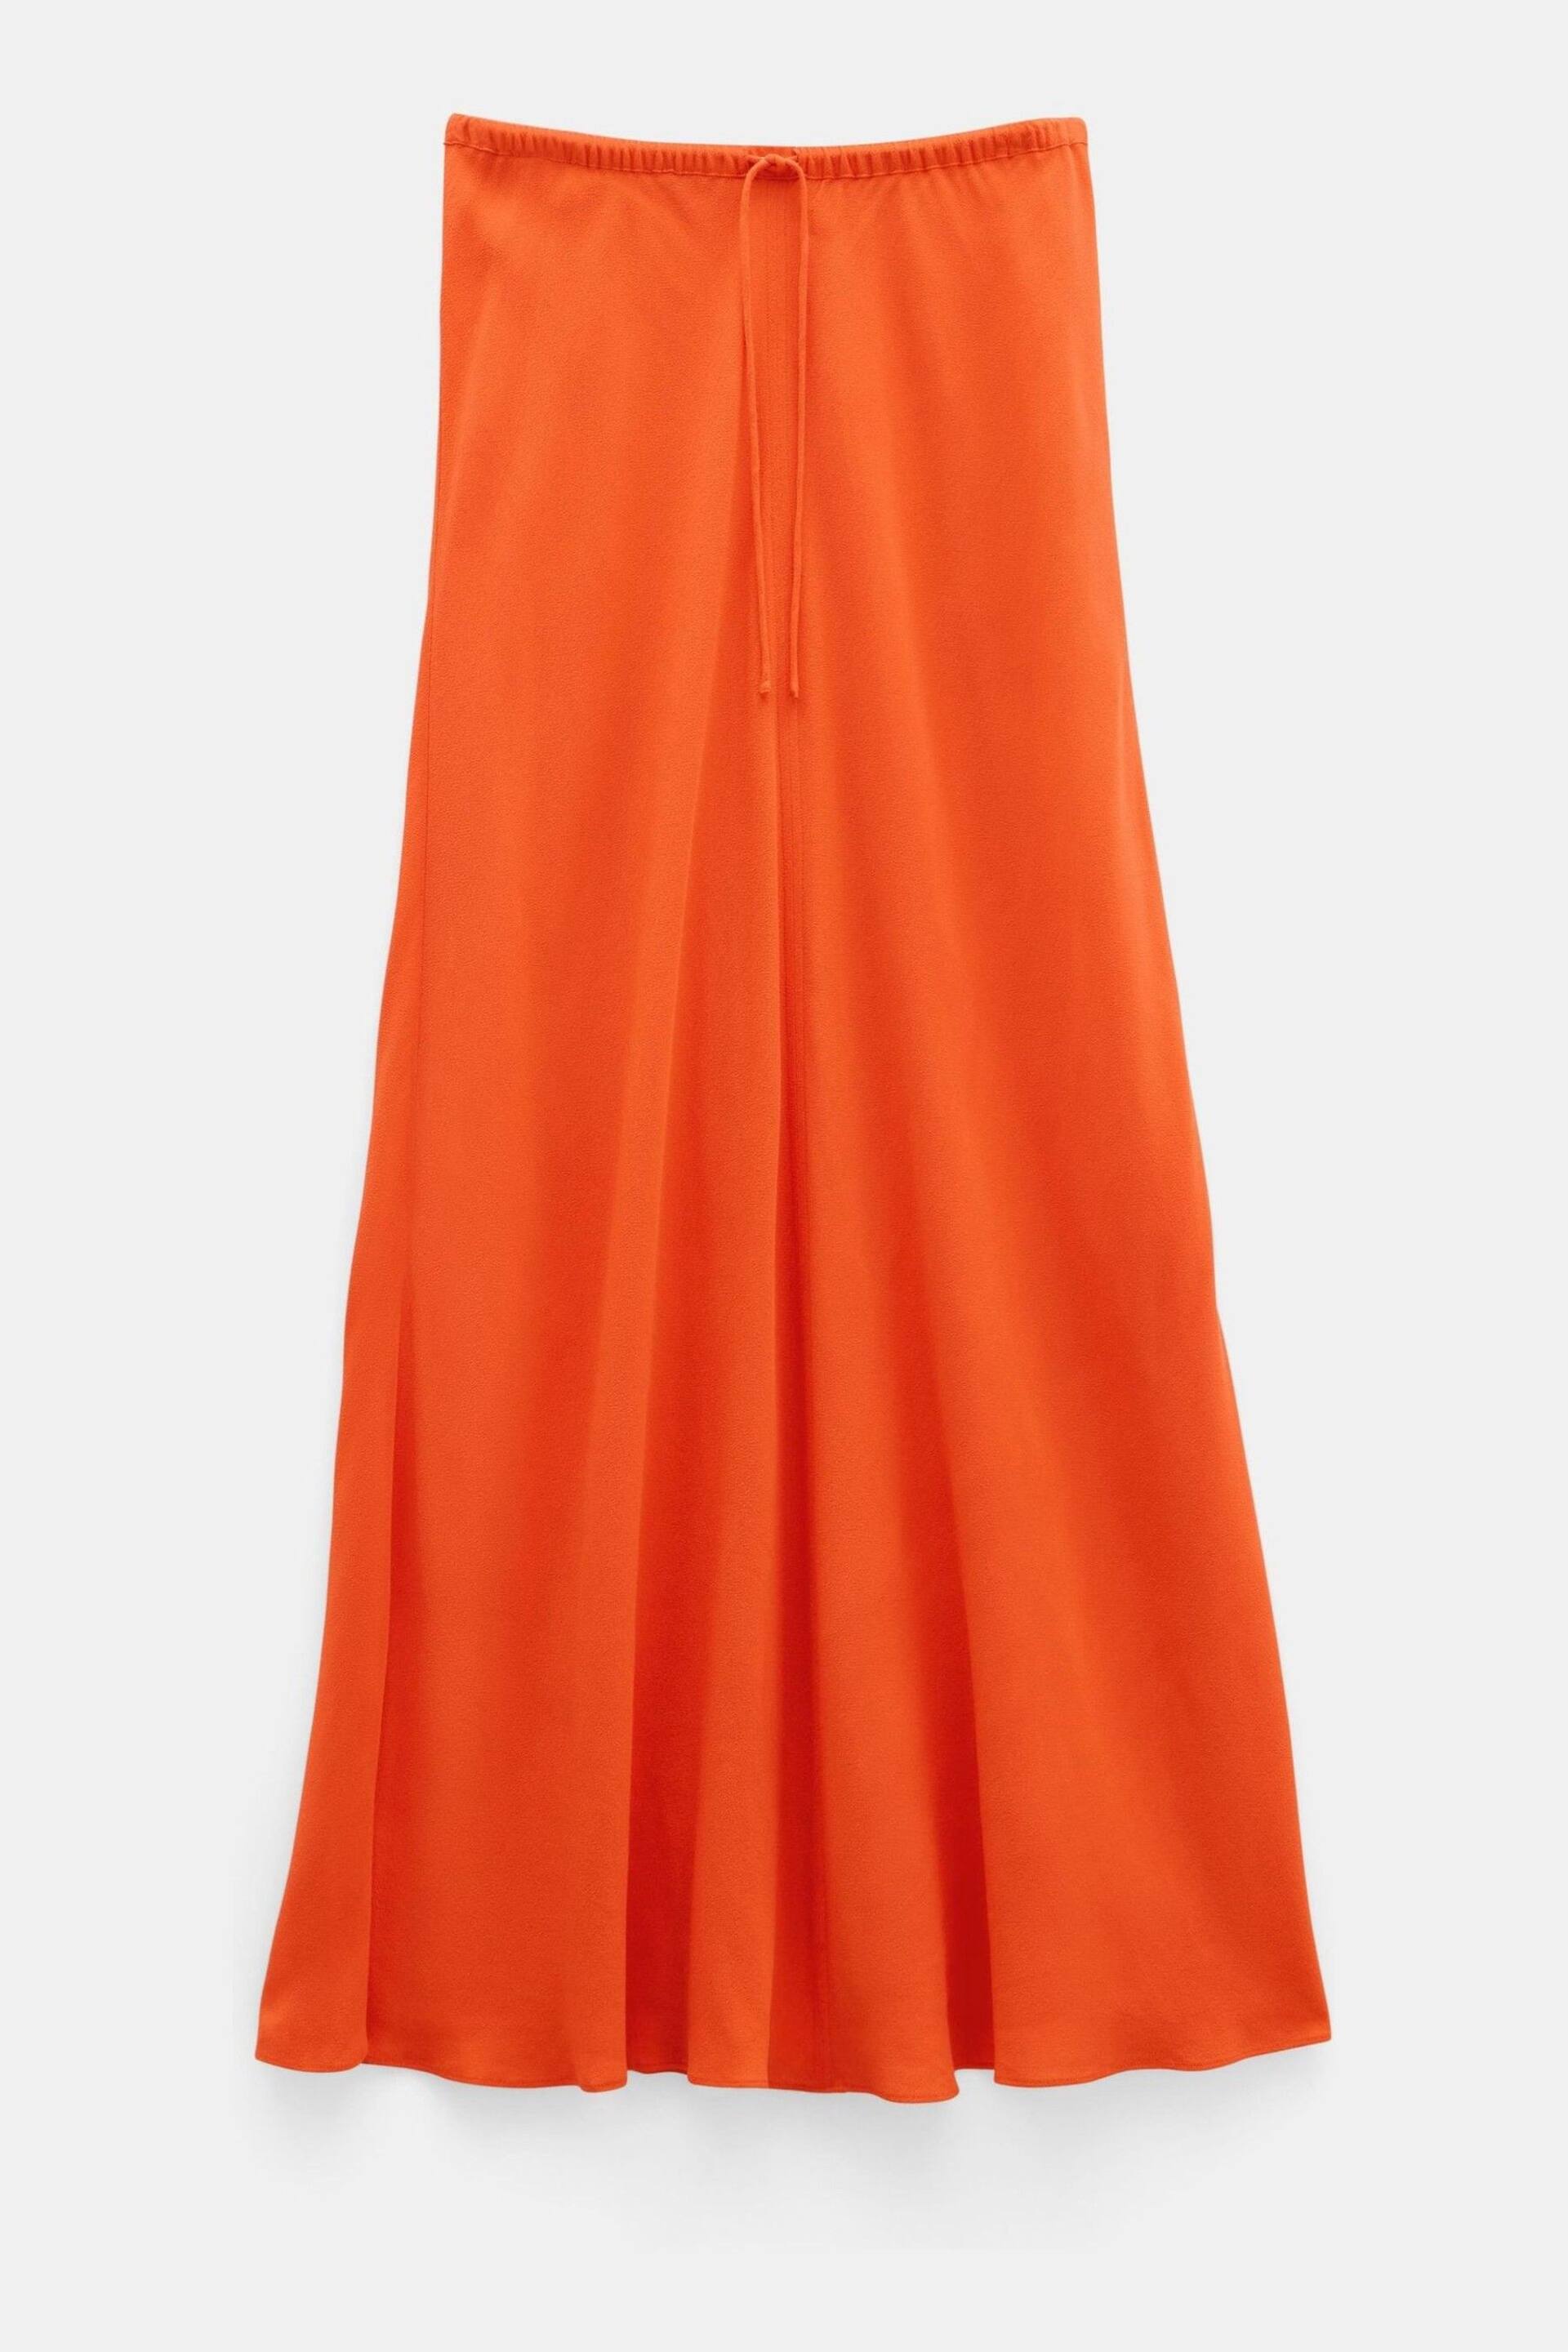 Hush Orange Hanna Maxi Skirt - Image 6 of 6